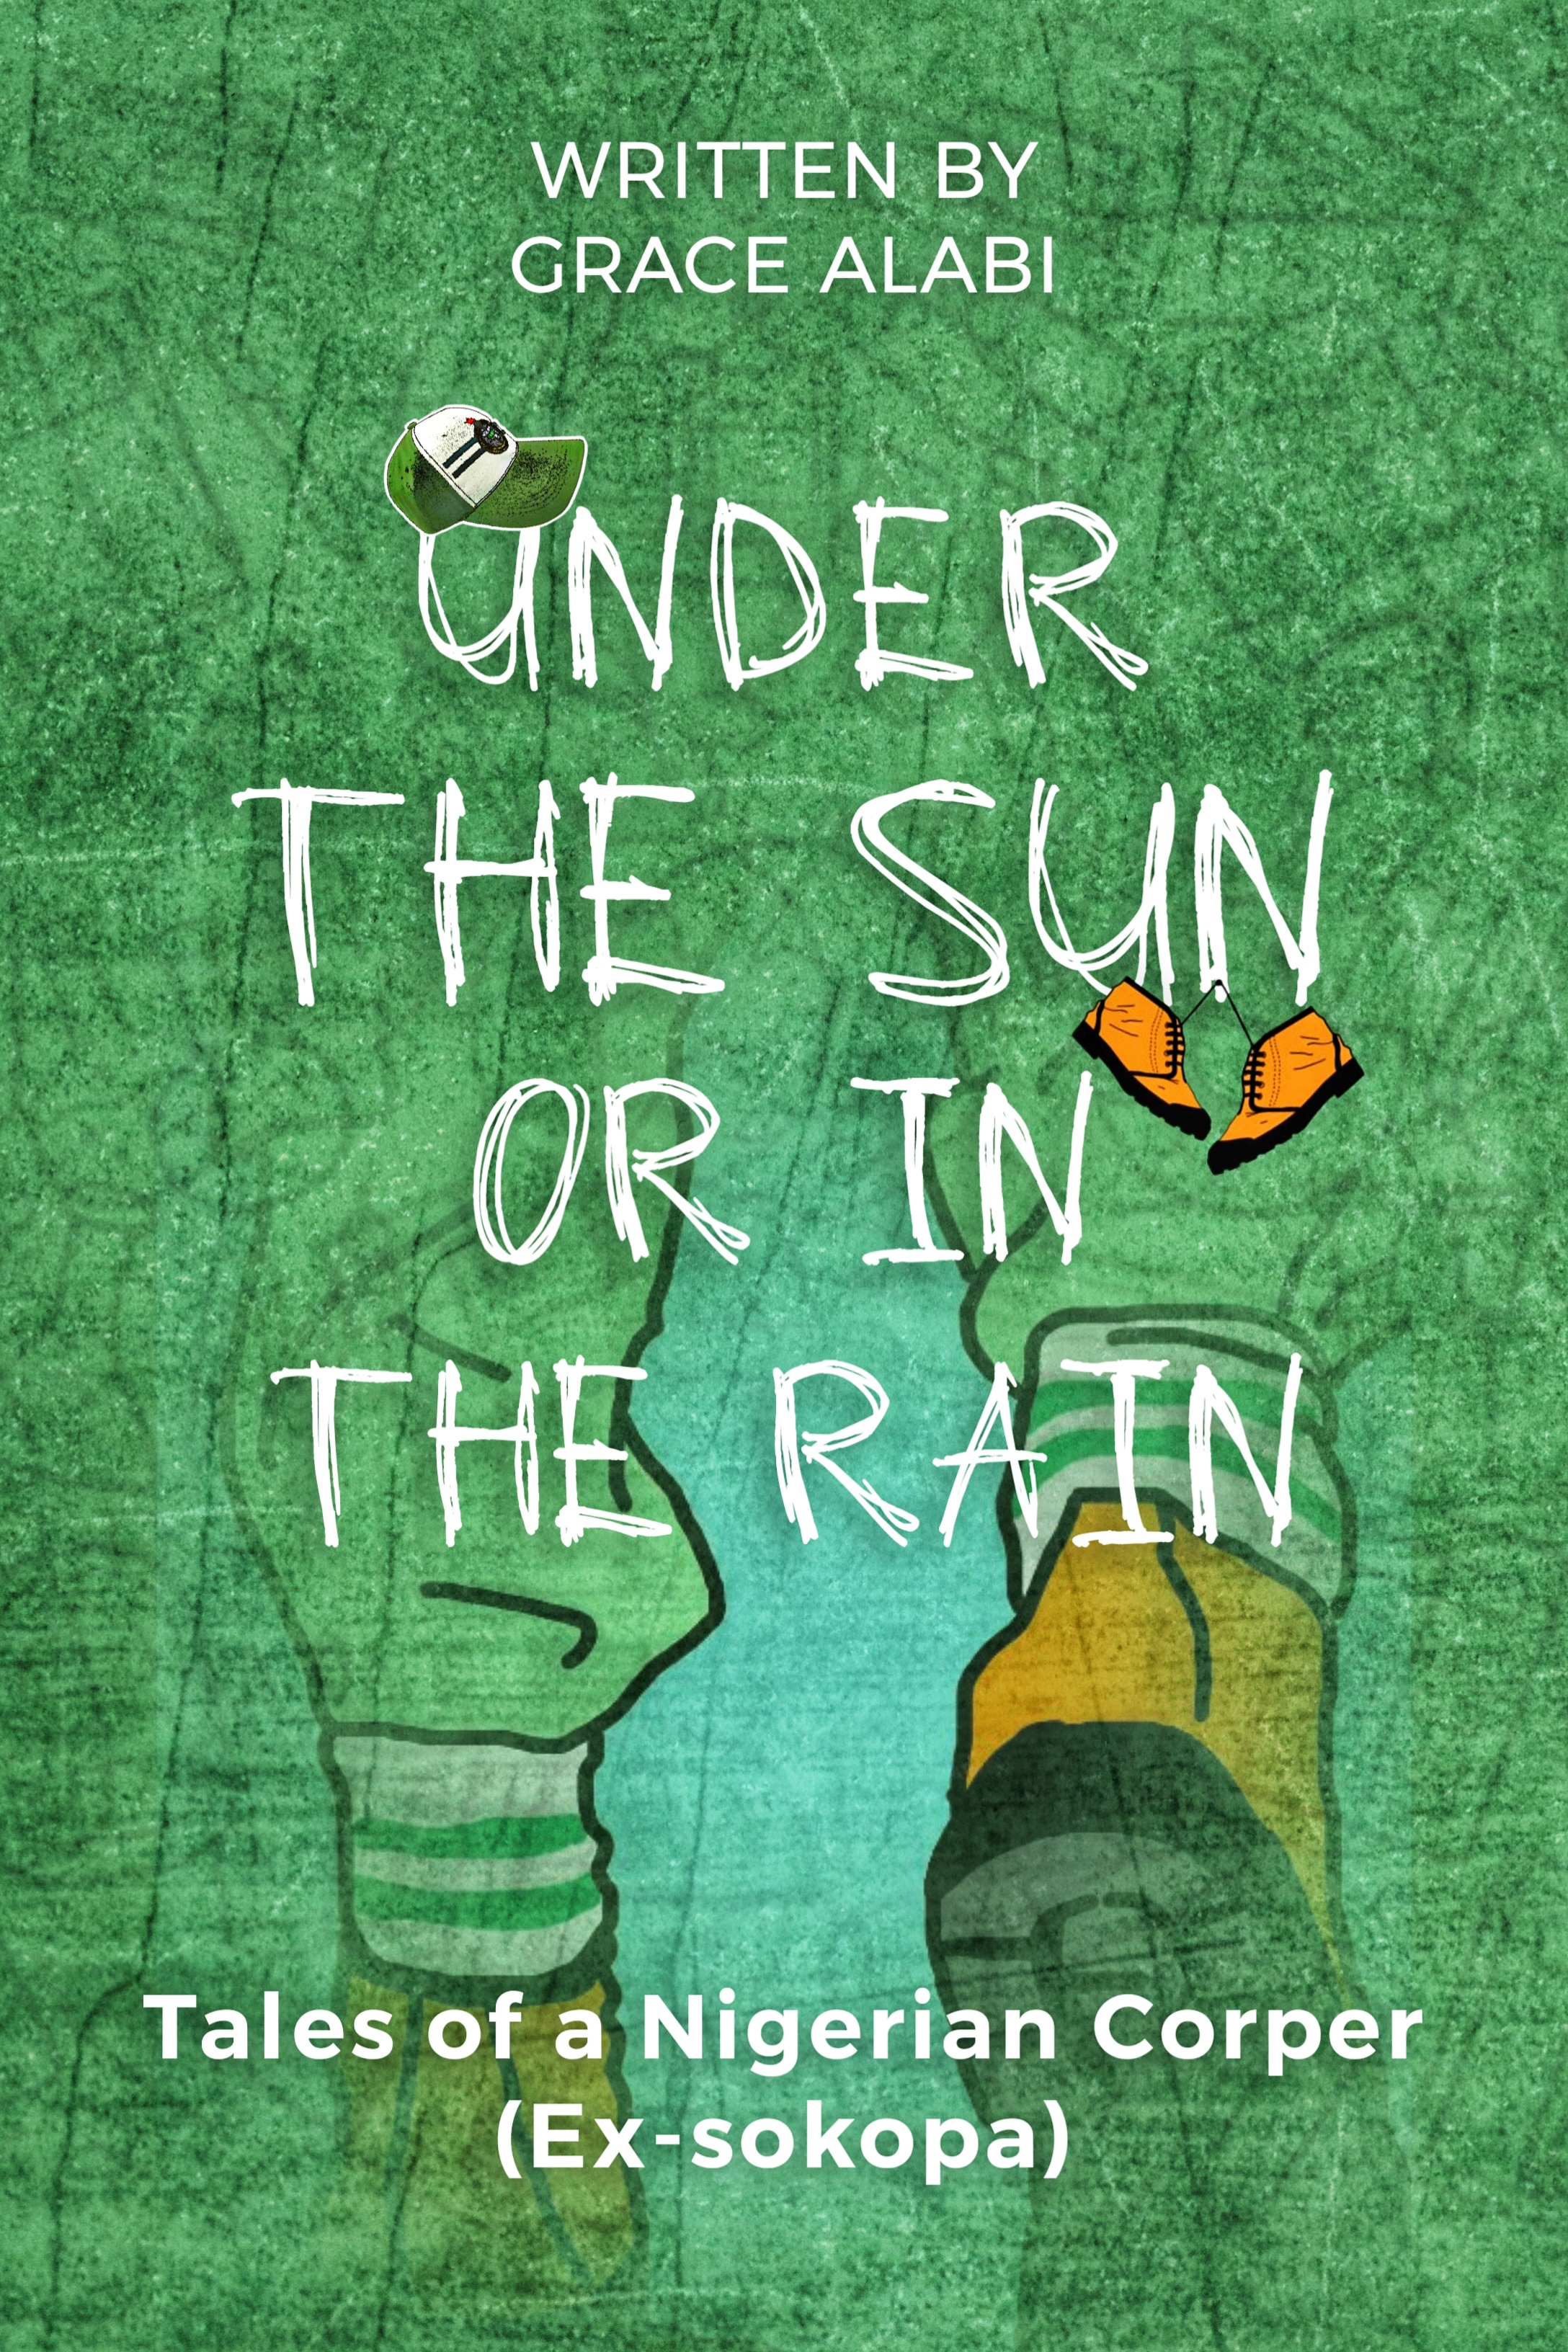 Under-The-Sun-Or-In-The-Rain